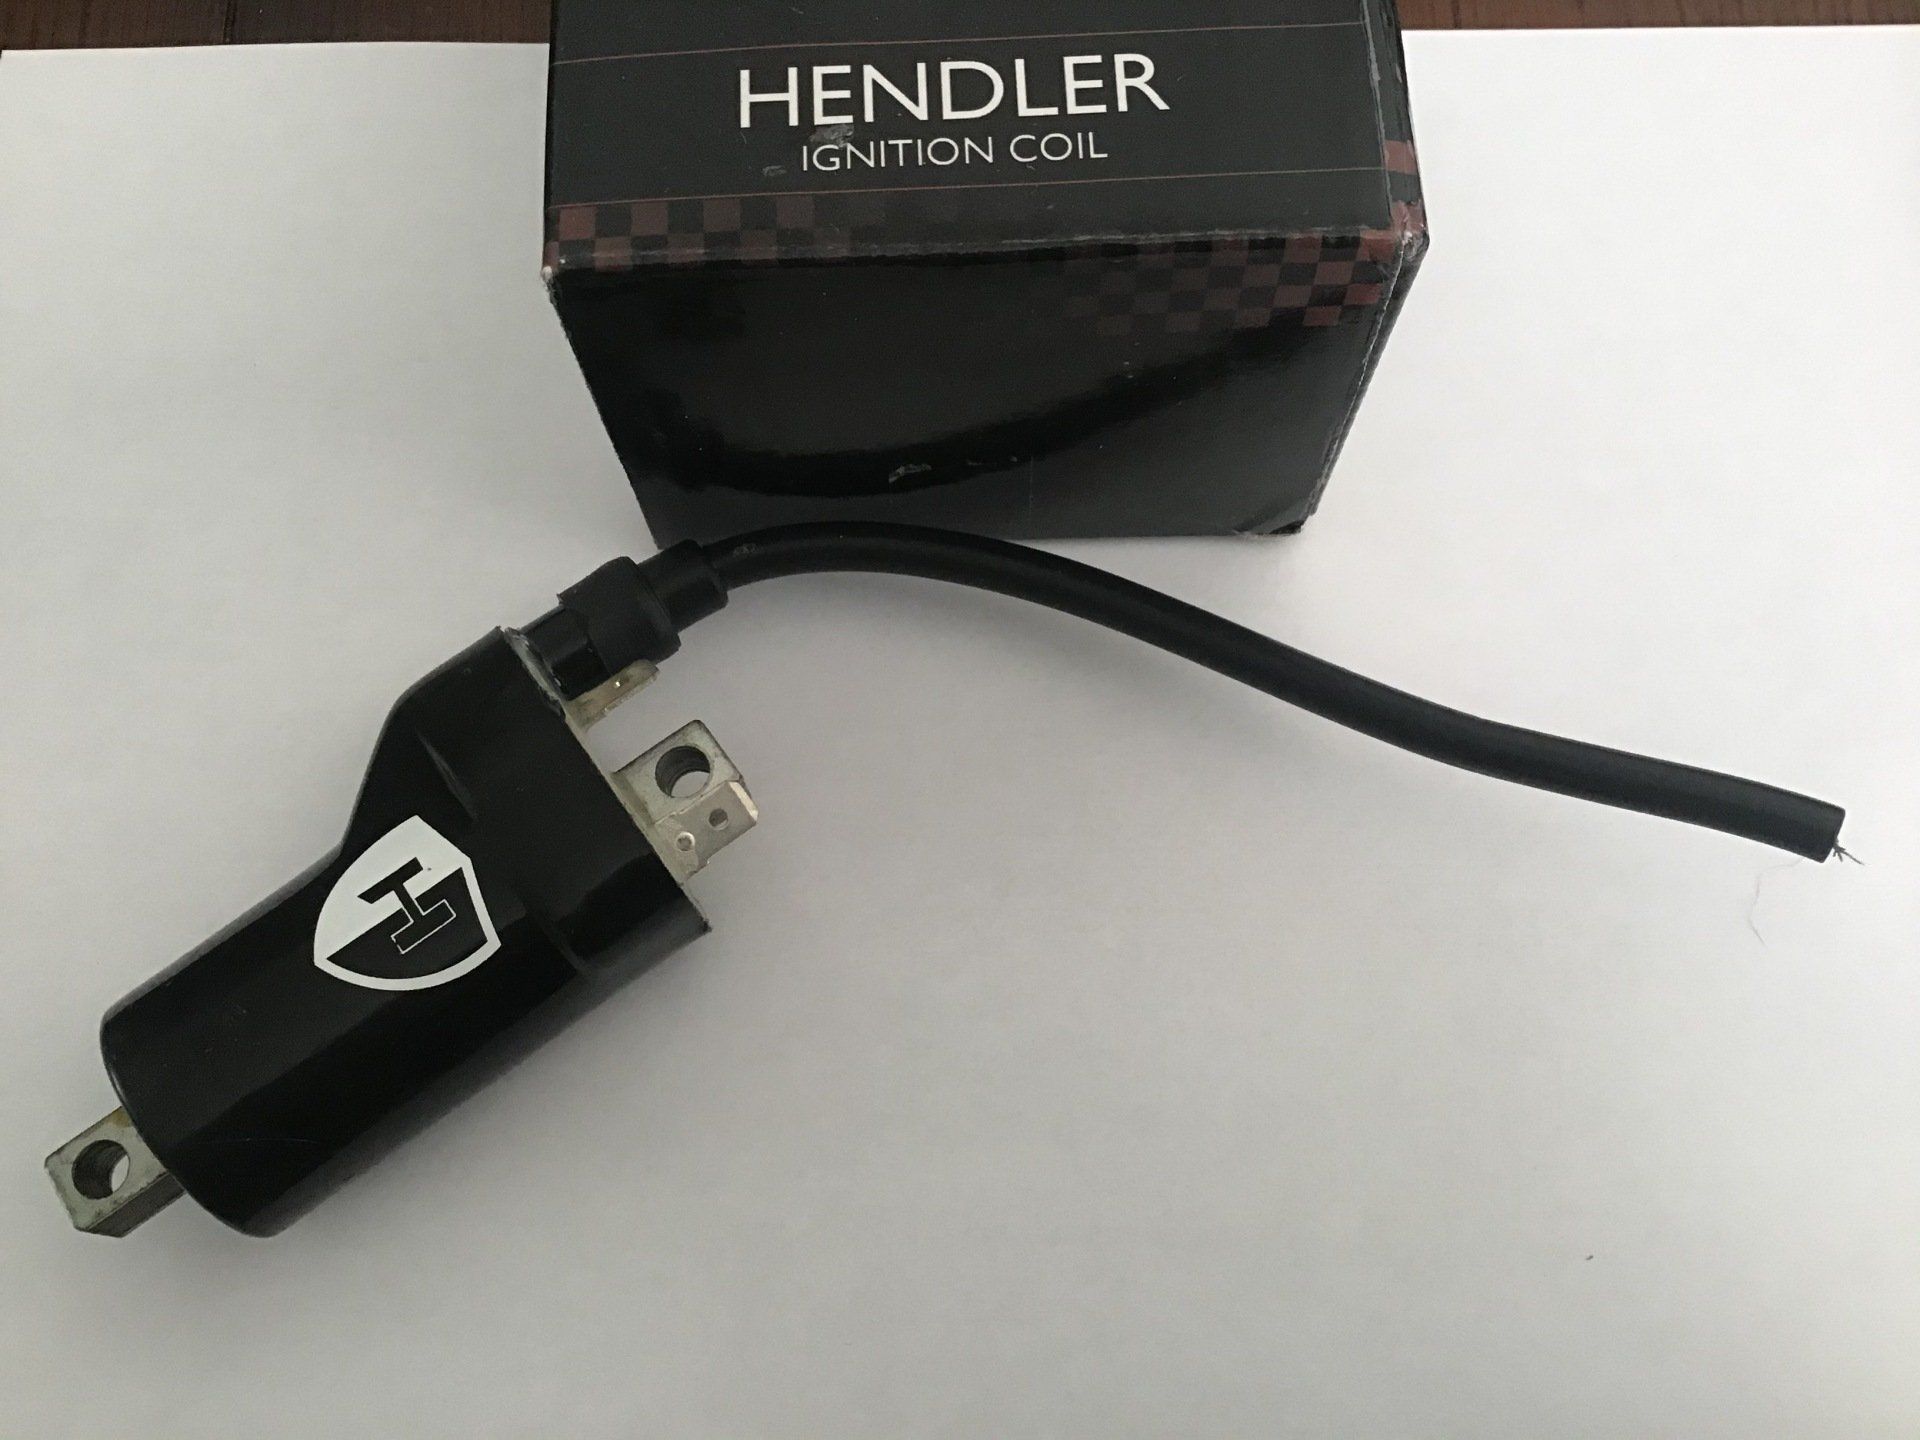 Hendler Ignition Coil